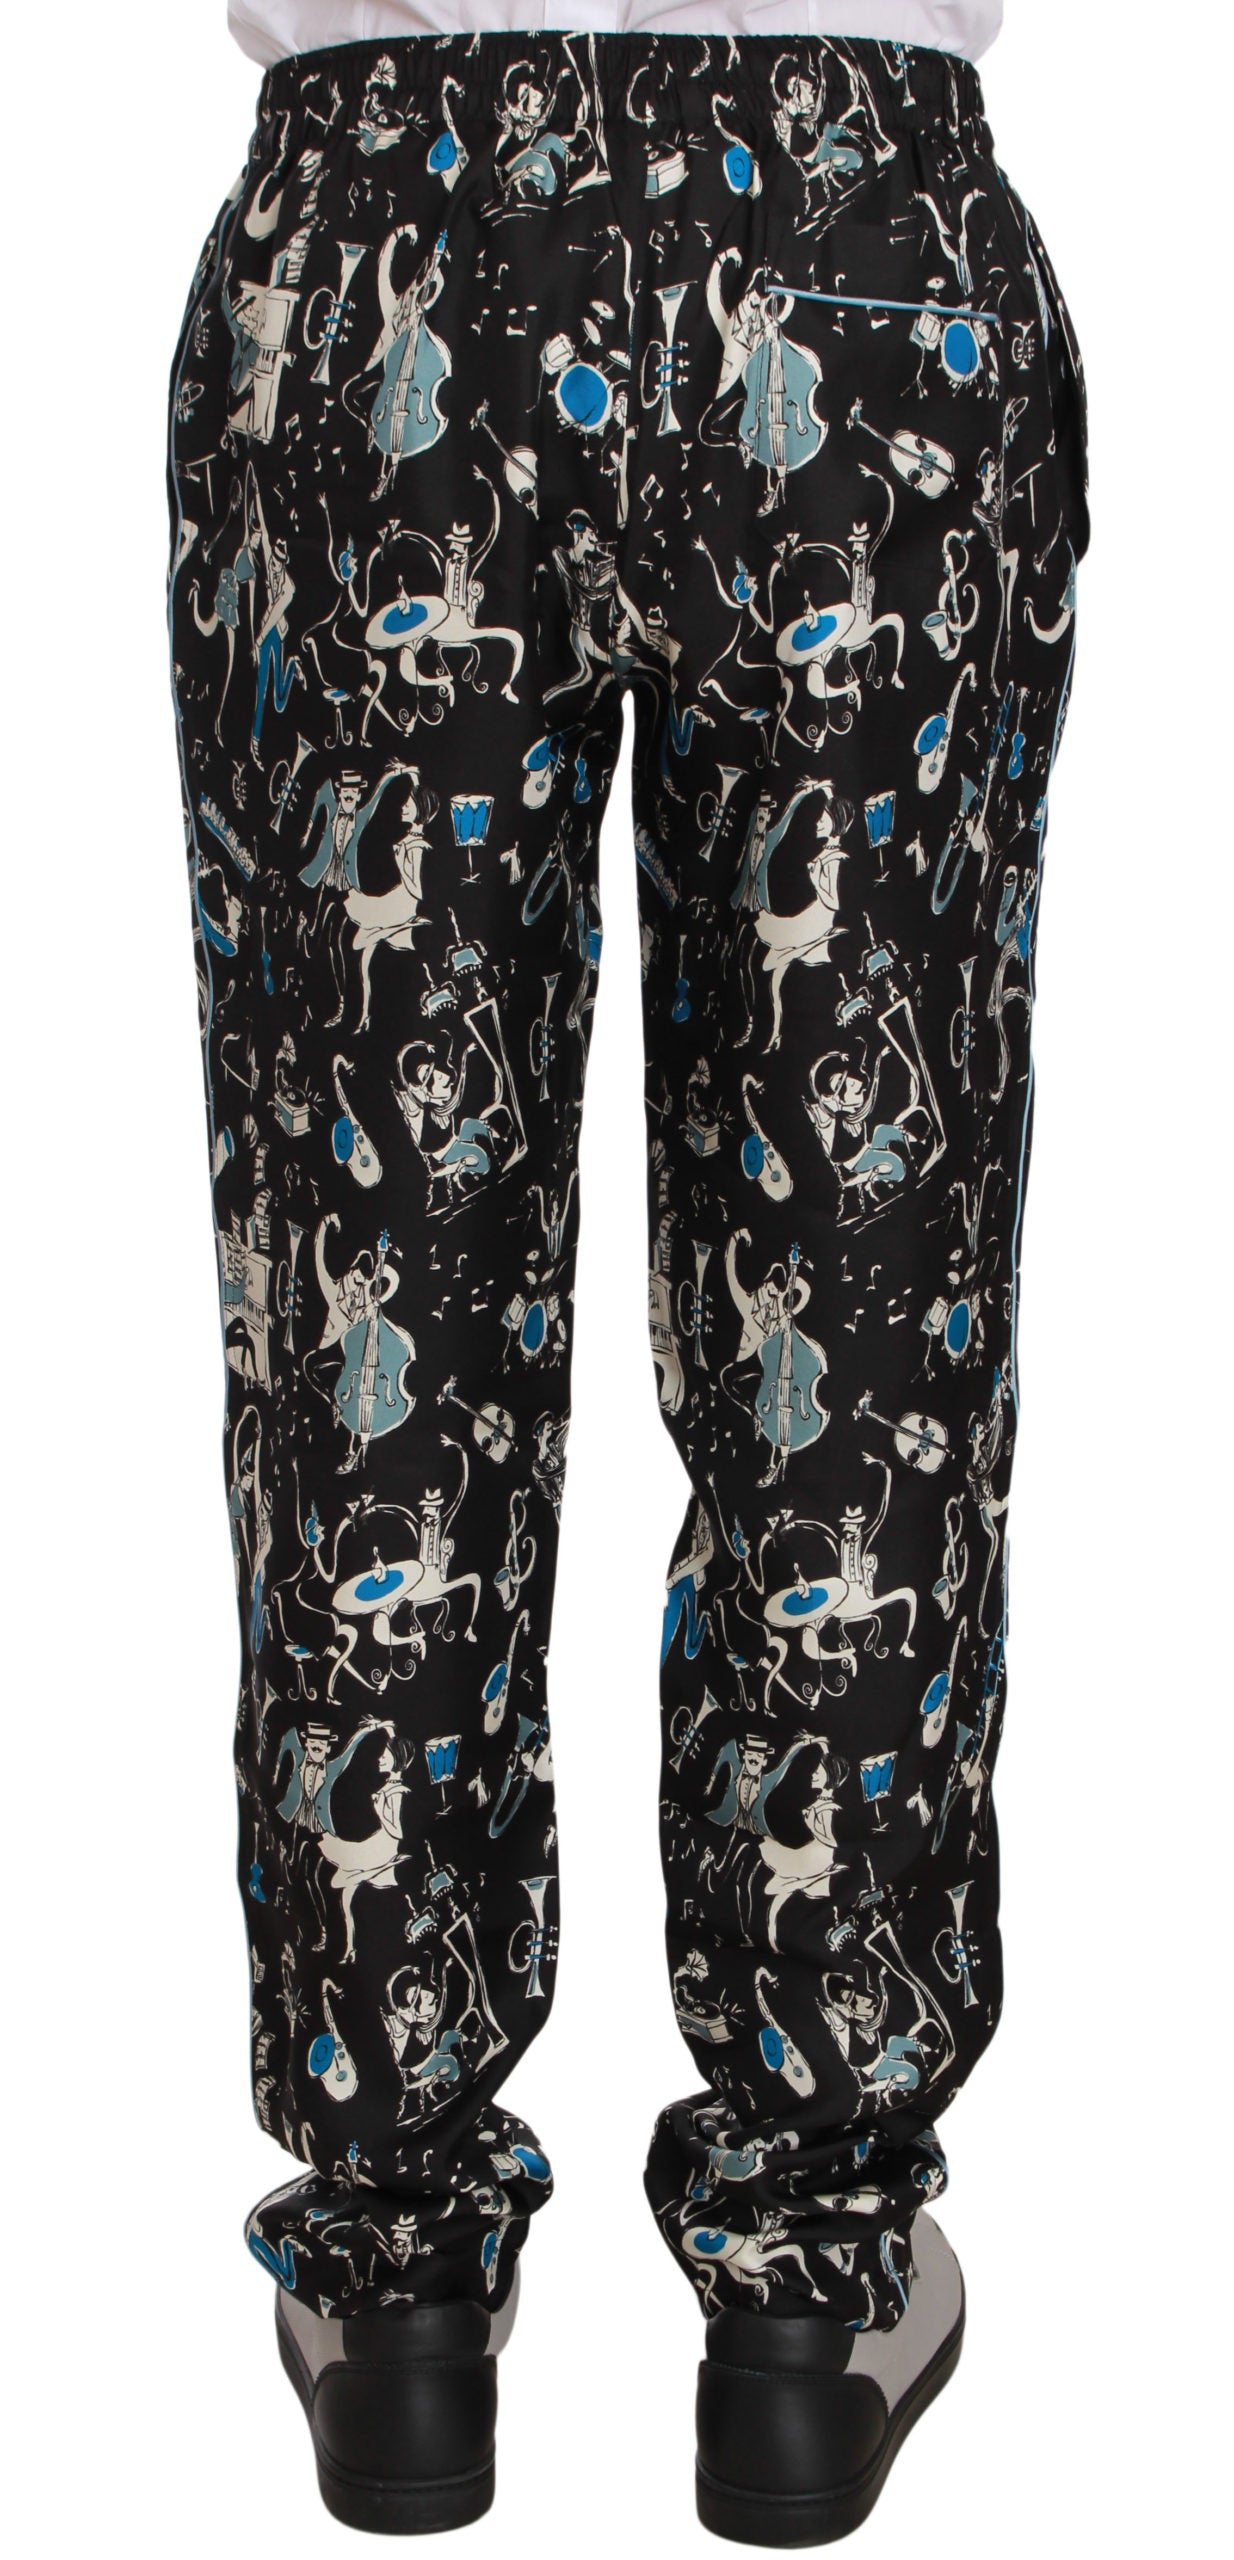 Buy Black Musical Instrument Sleepwear Pants by Dolce & Gabbana